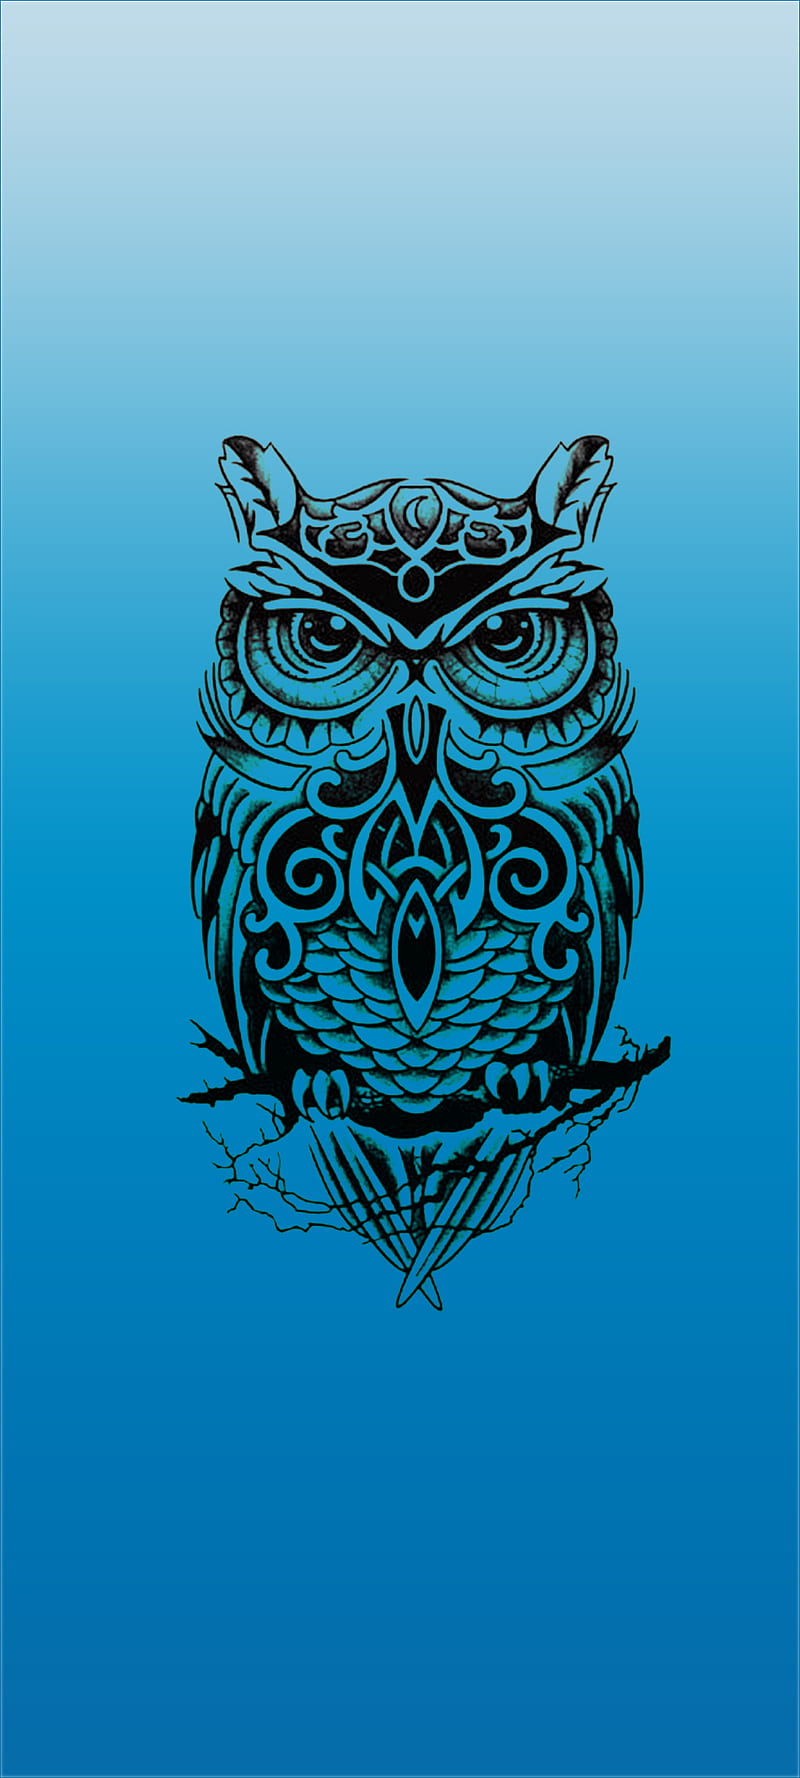 230 Background Of Tribal Owl Tattoo Designs Illustrations RoyaltyFree  Vector Graphics  Clip Art  iStock